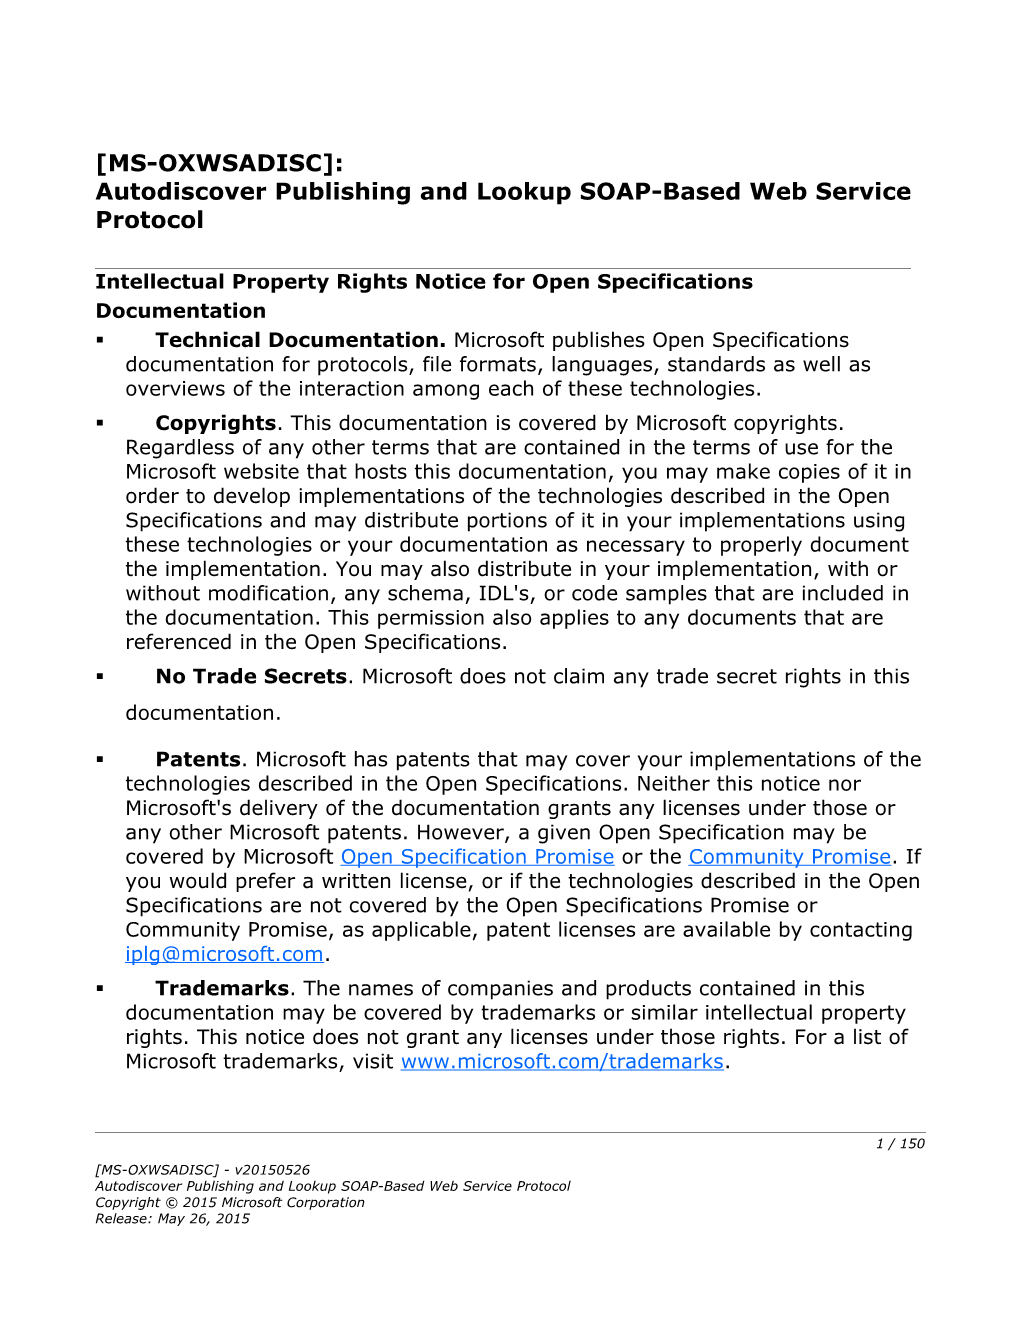 Autodiscover Publishing and Lookup SOAP-Based Web Service Protocol